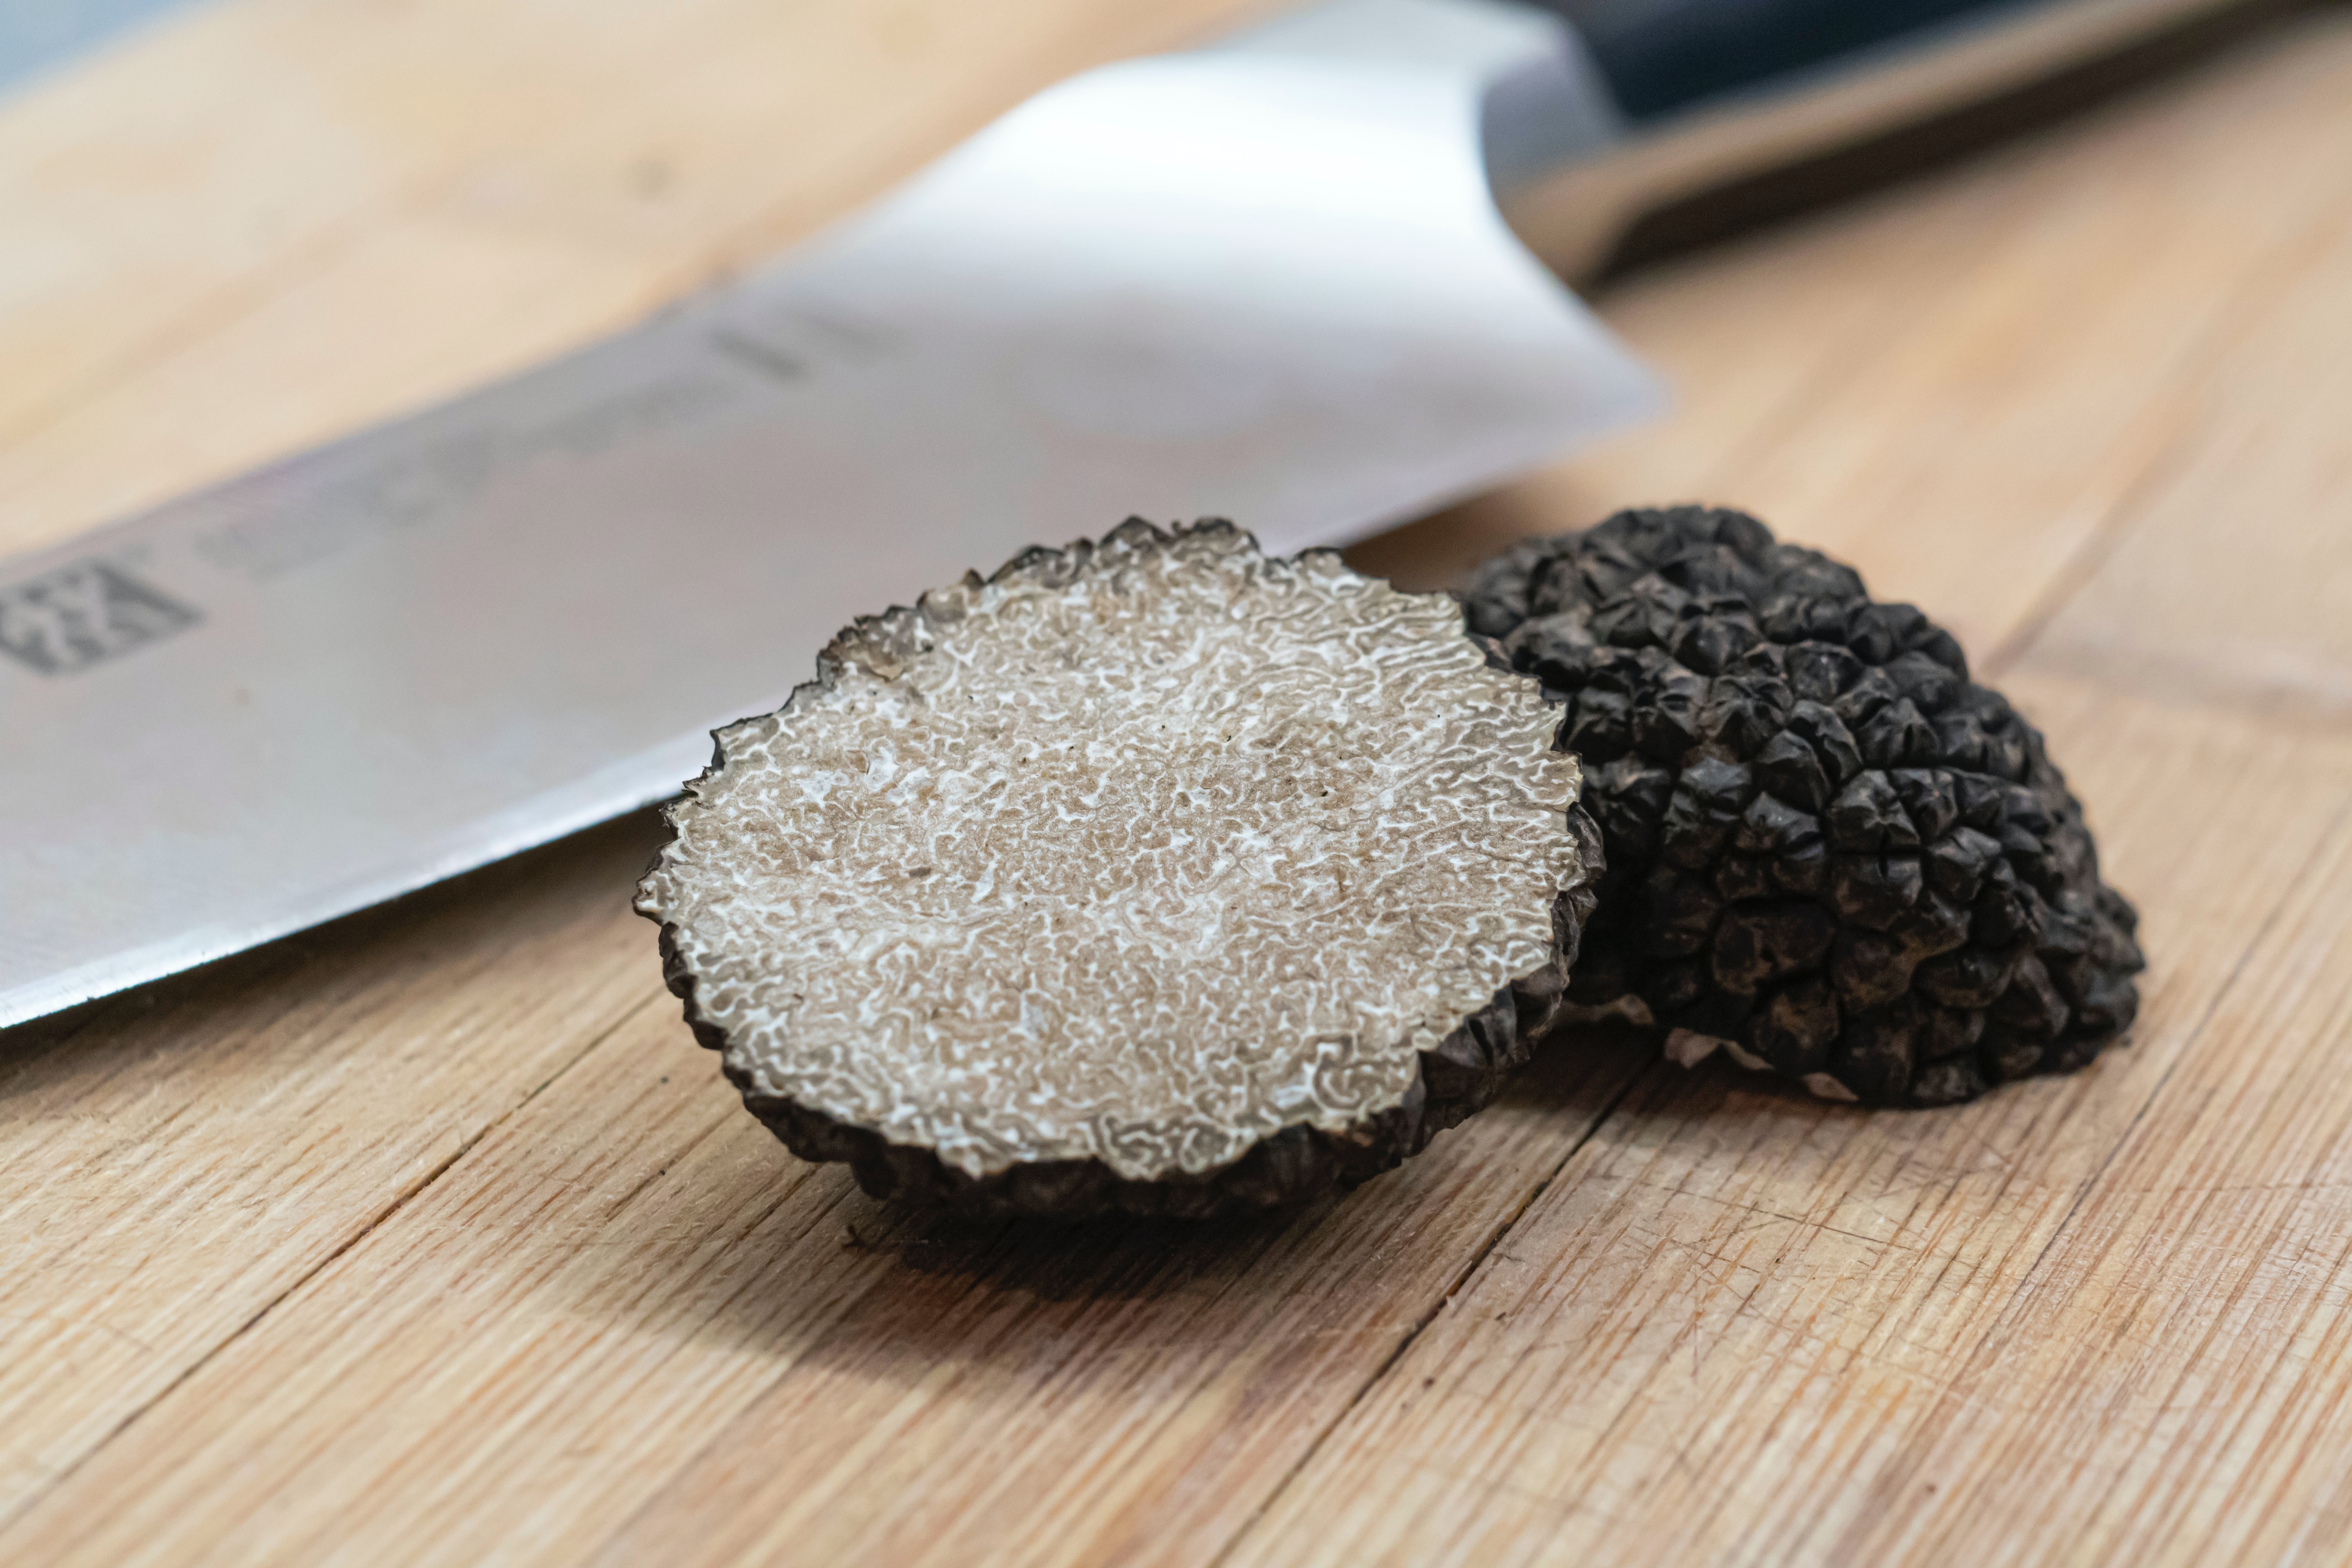 Truffle fungus